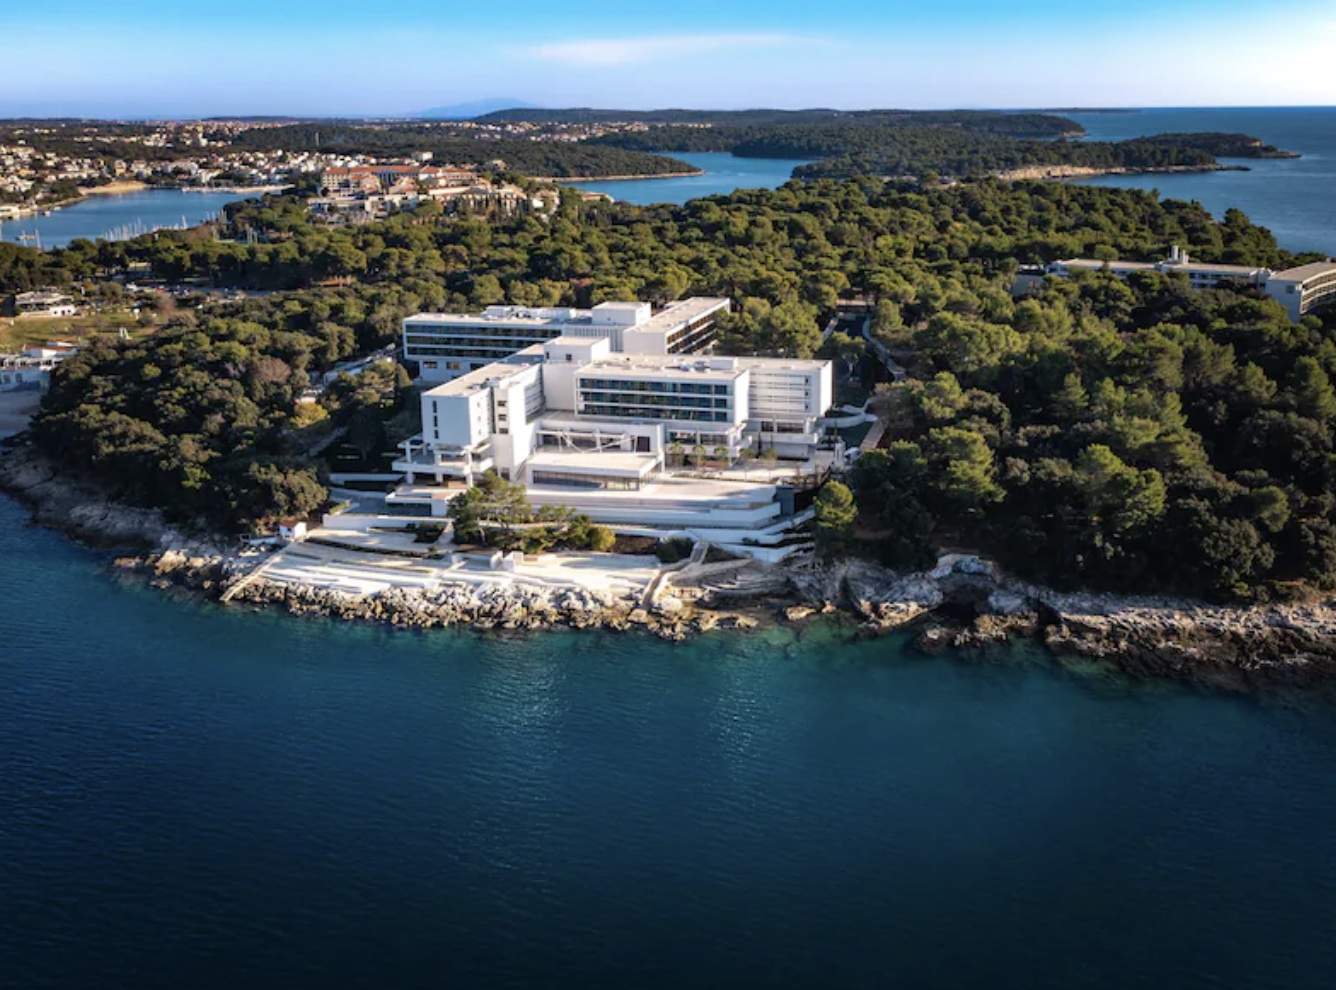 The Grand Hotel Brioni Pula, Croatia Offers Singular Luxury – And Great Deals!